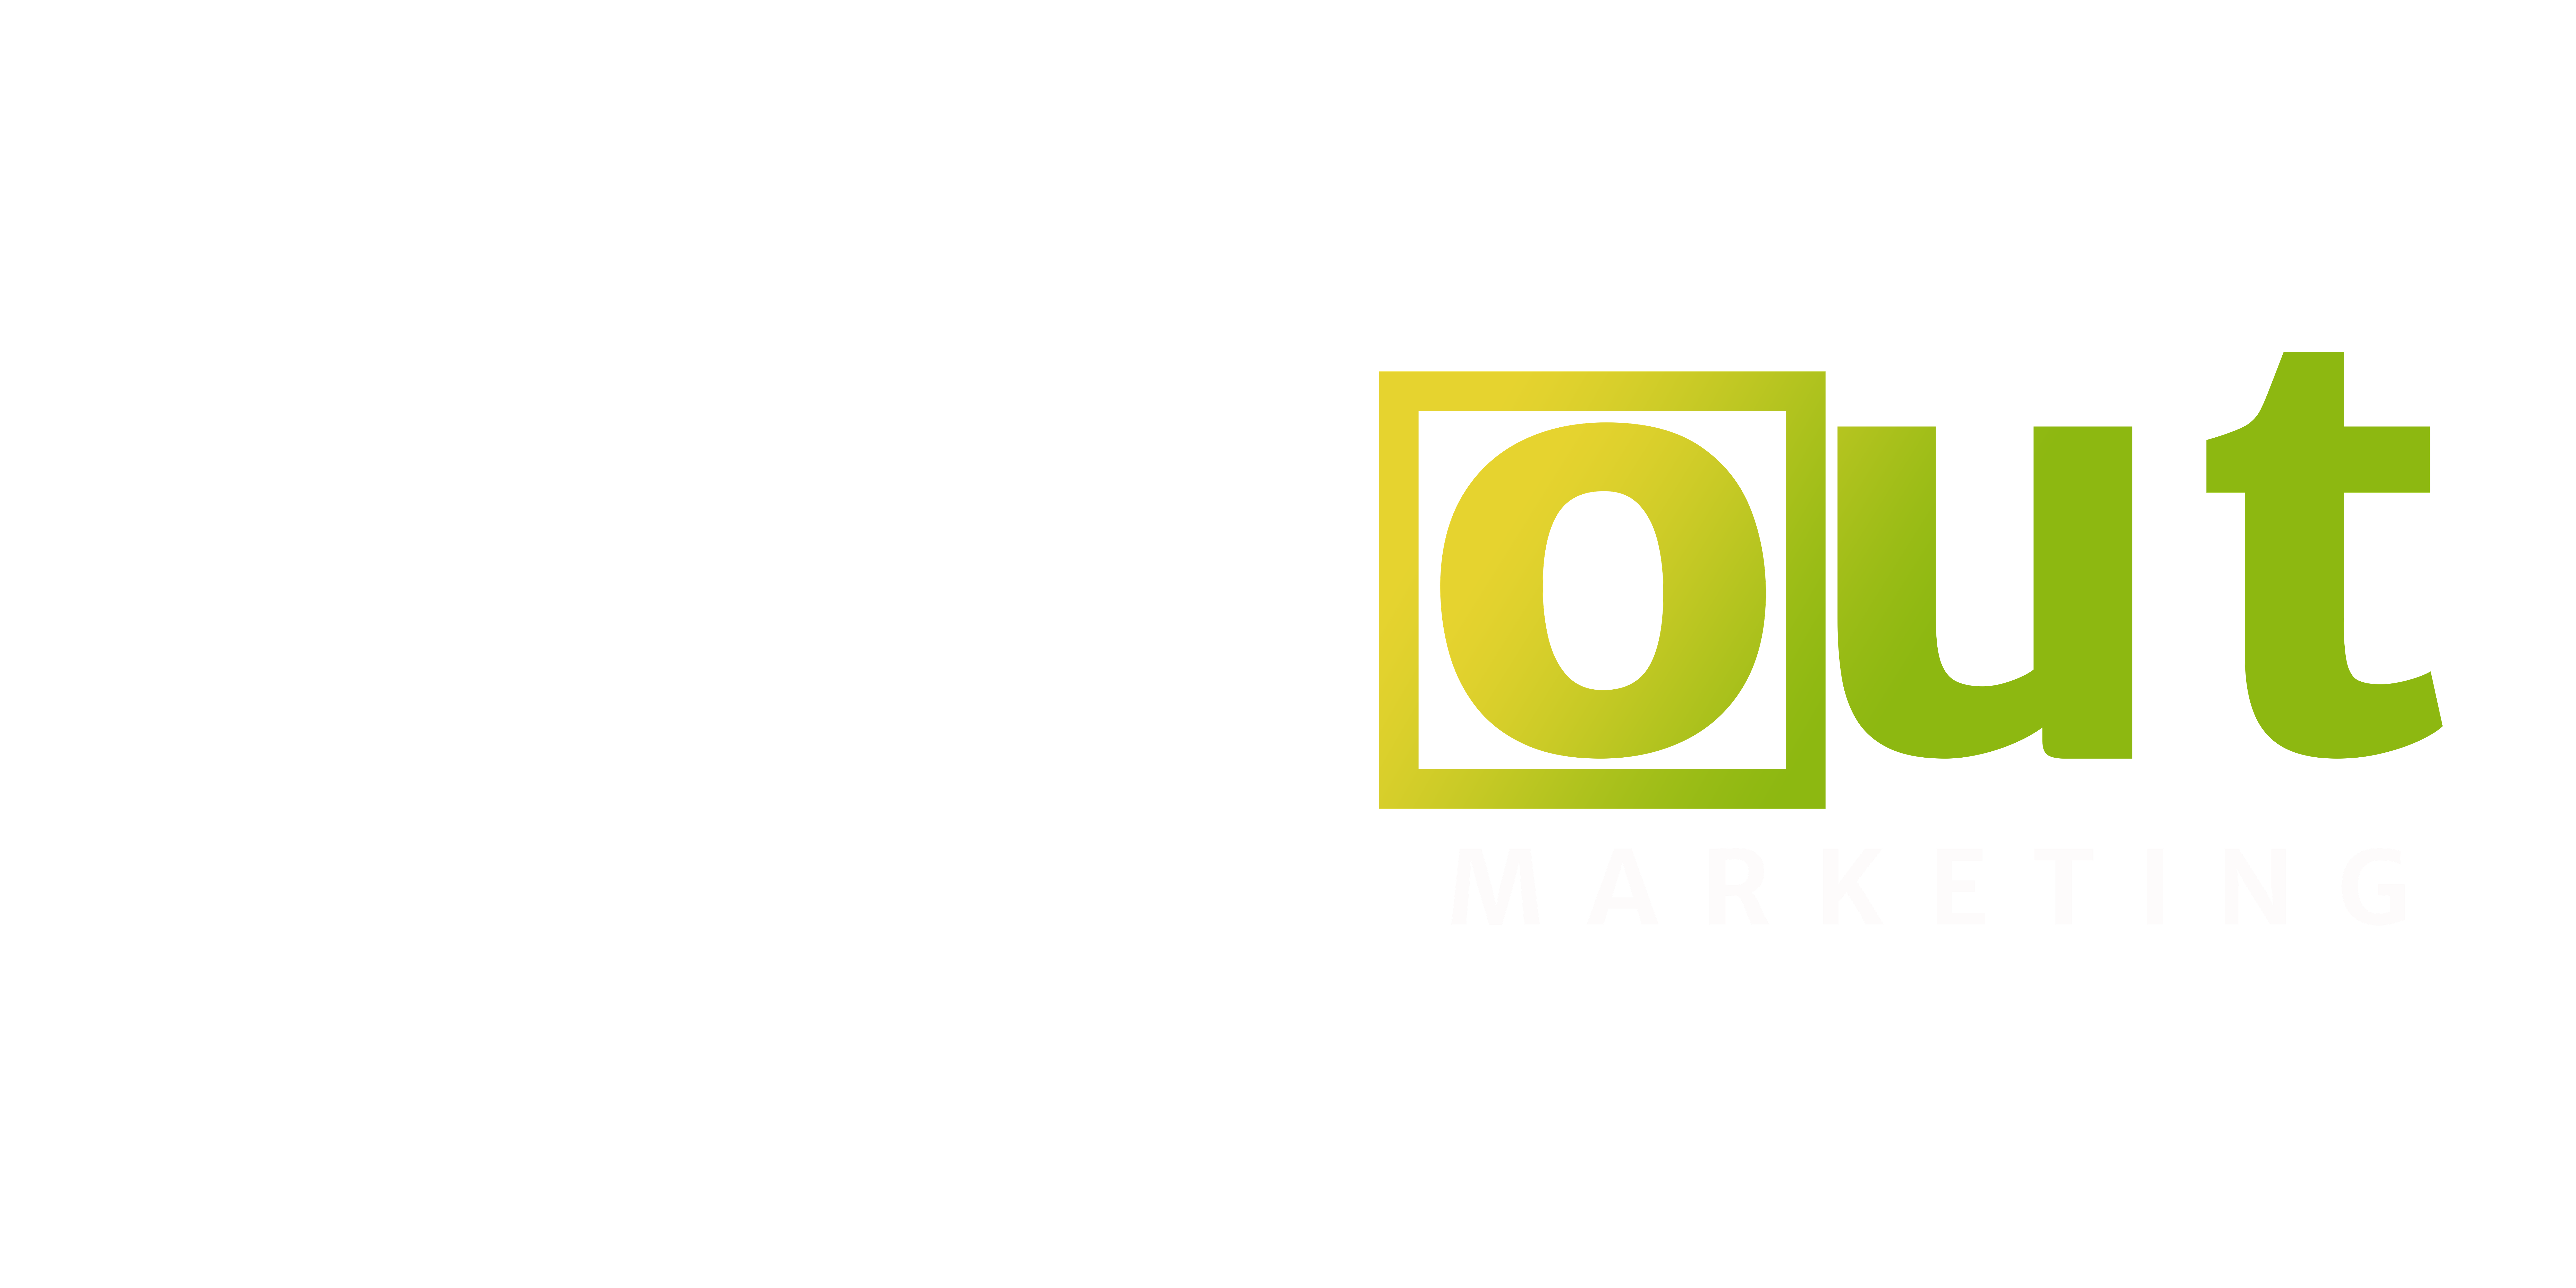 standout_logo_largeblks9.png